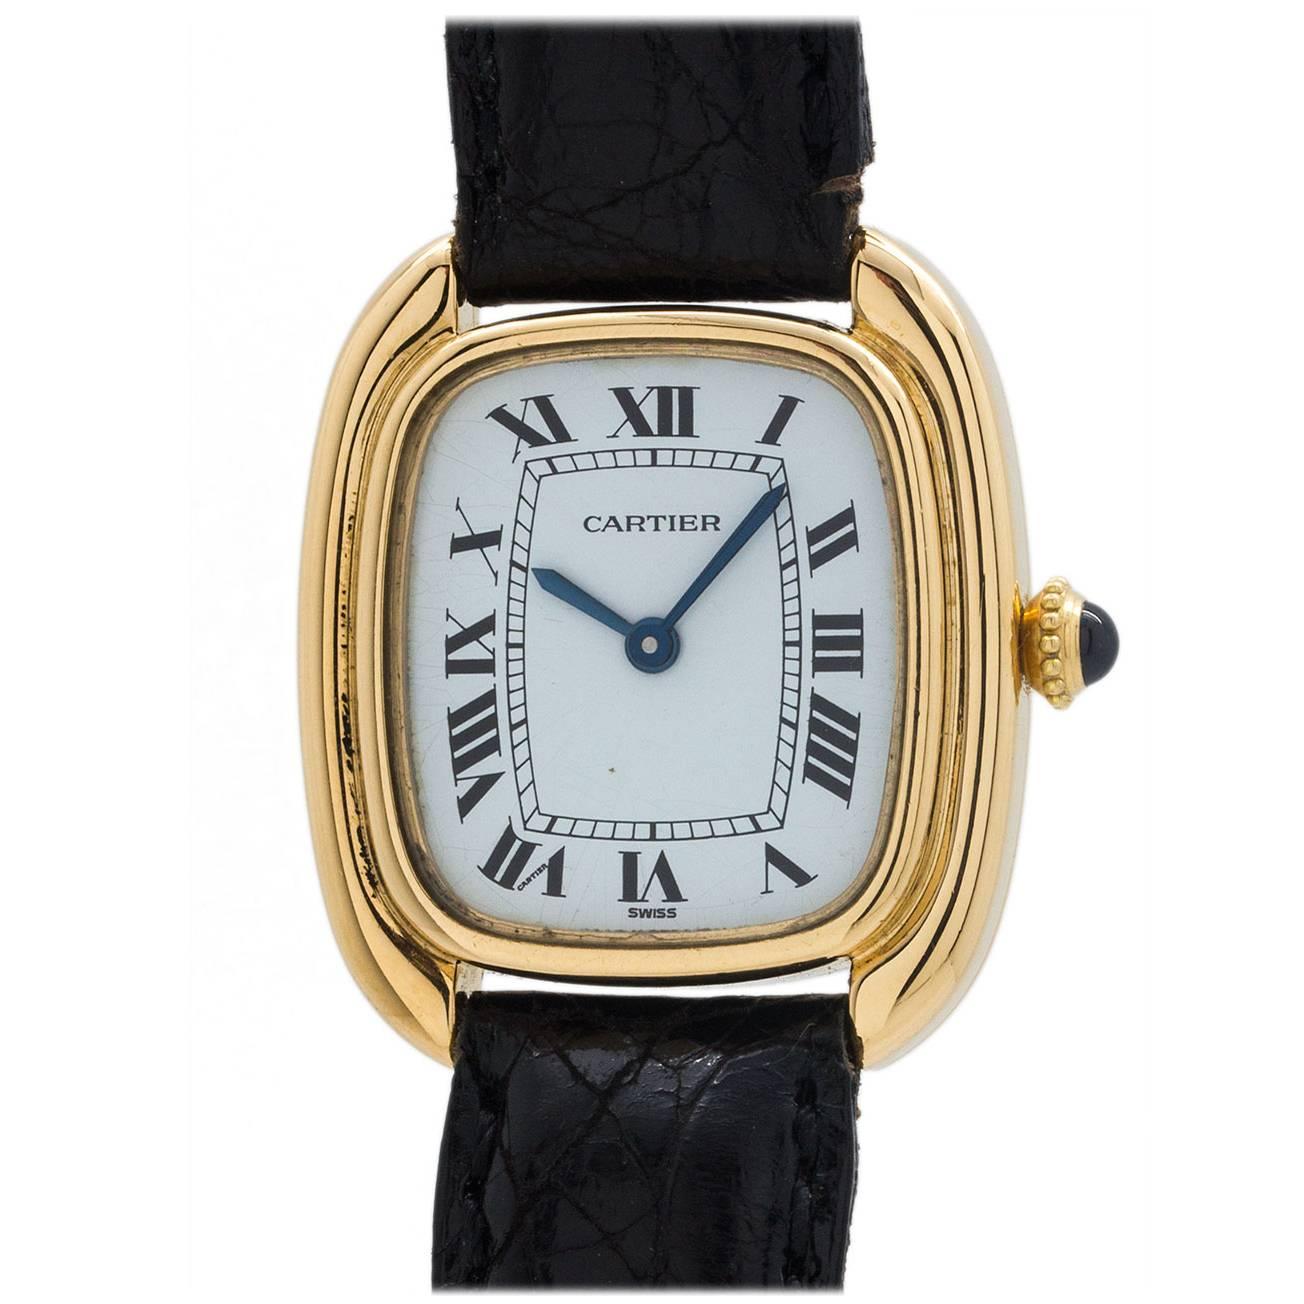  Cartier Ladies Yellow Gold "Gondole" Manual Wind Wristwatch